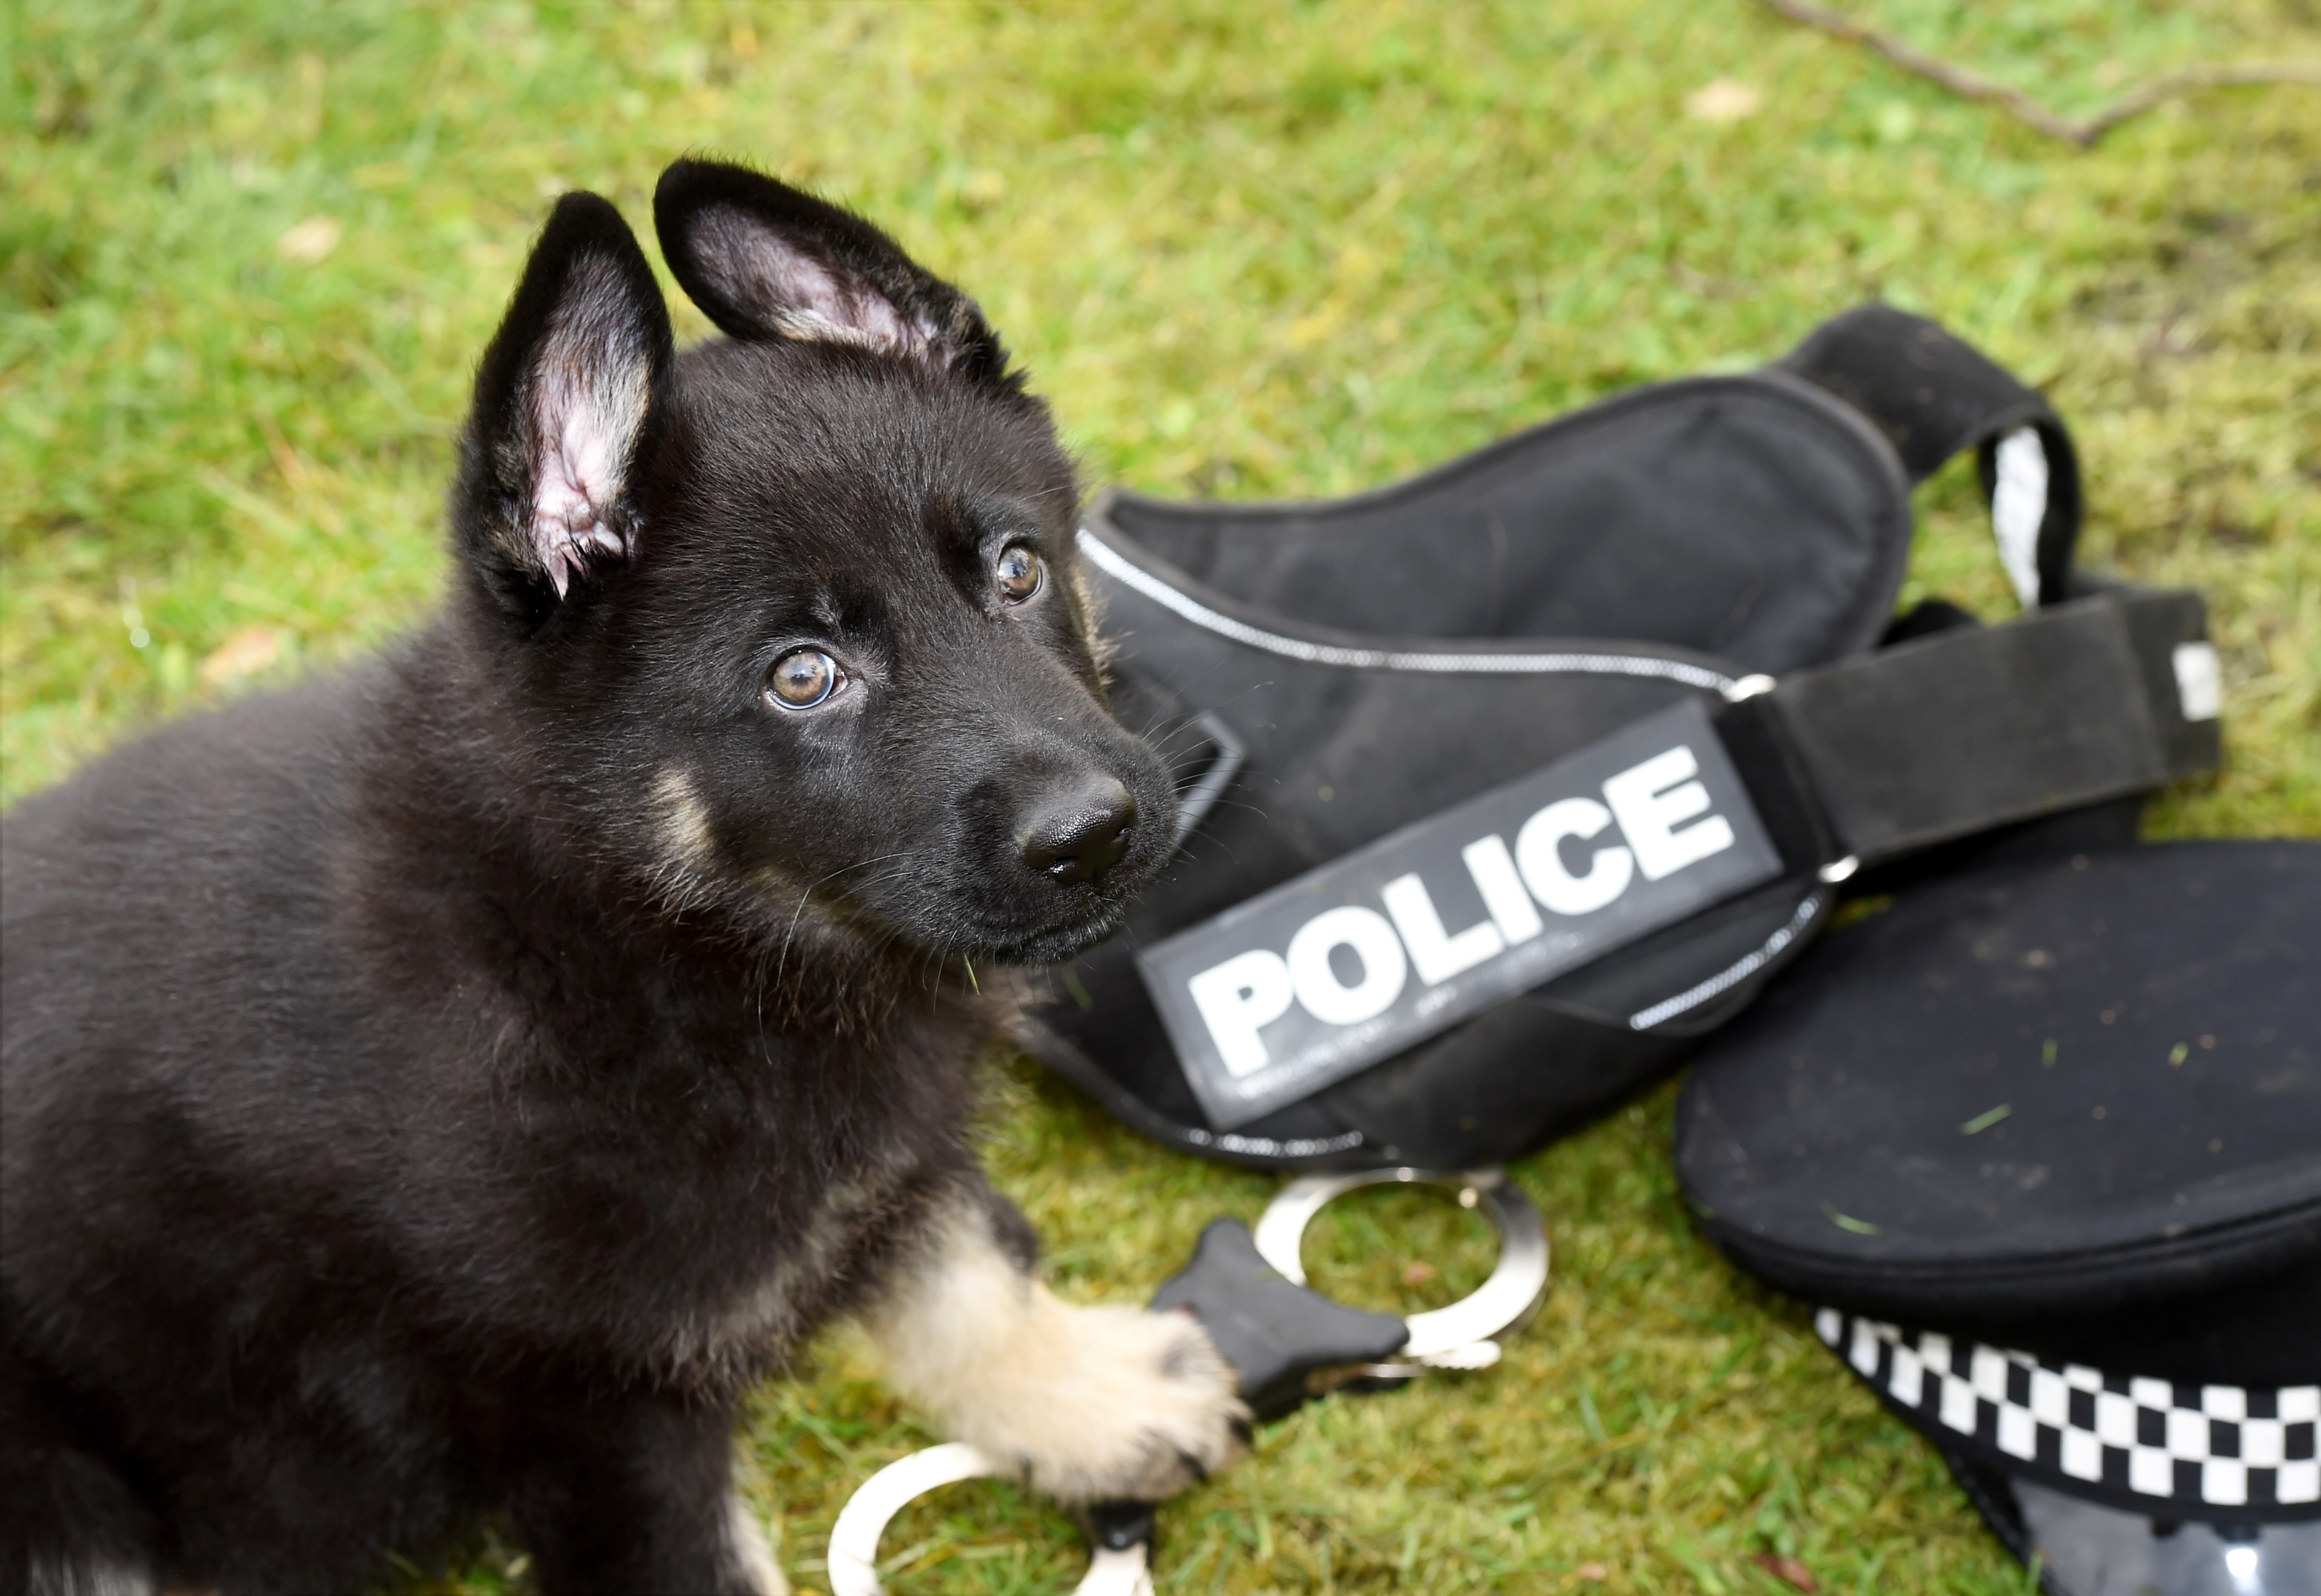 Police Scotland's newest four legged recruit, Police Dog Bodie